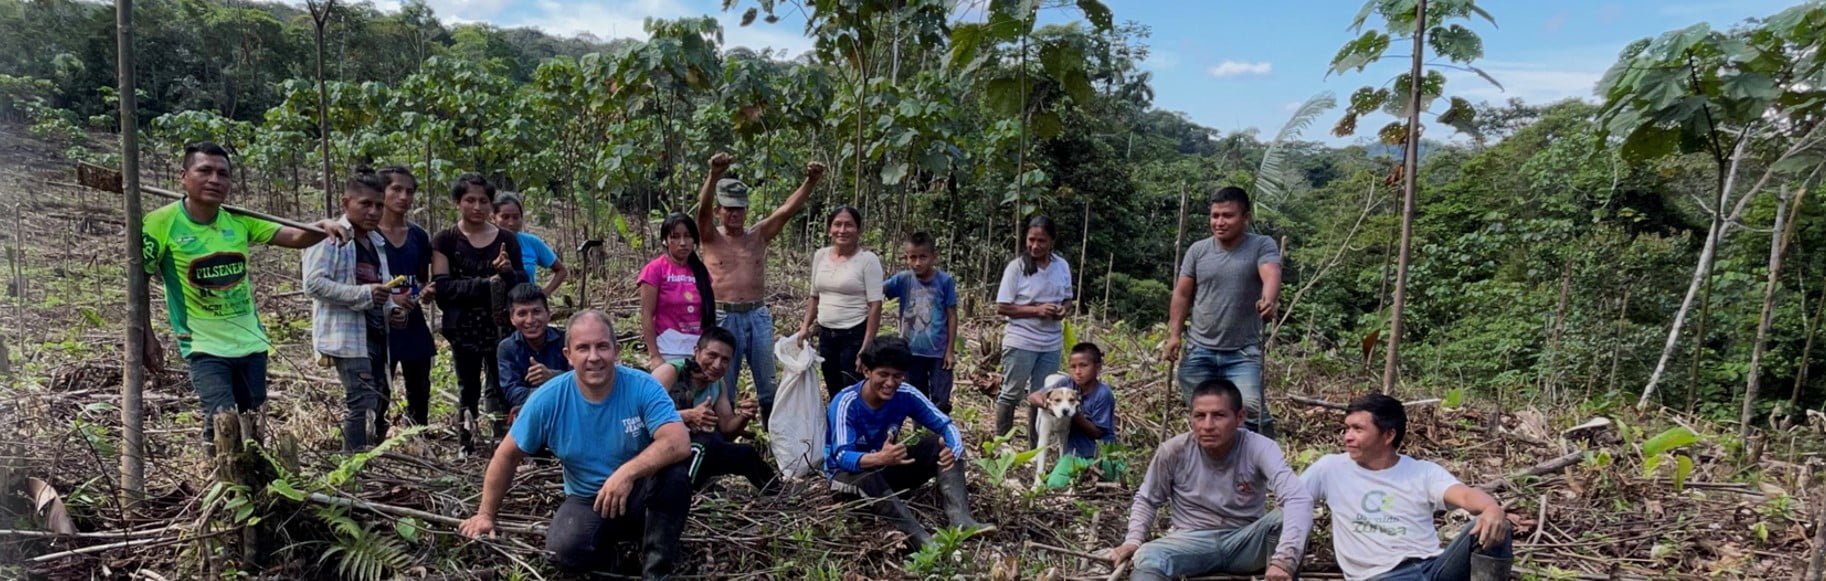 Ecuador Growing Trees Foundation